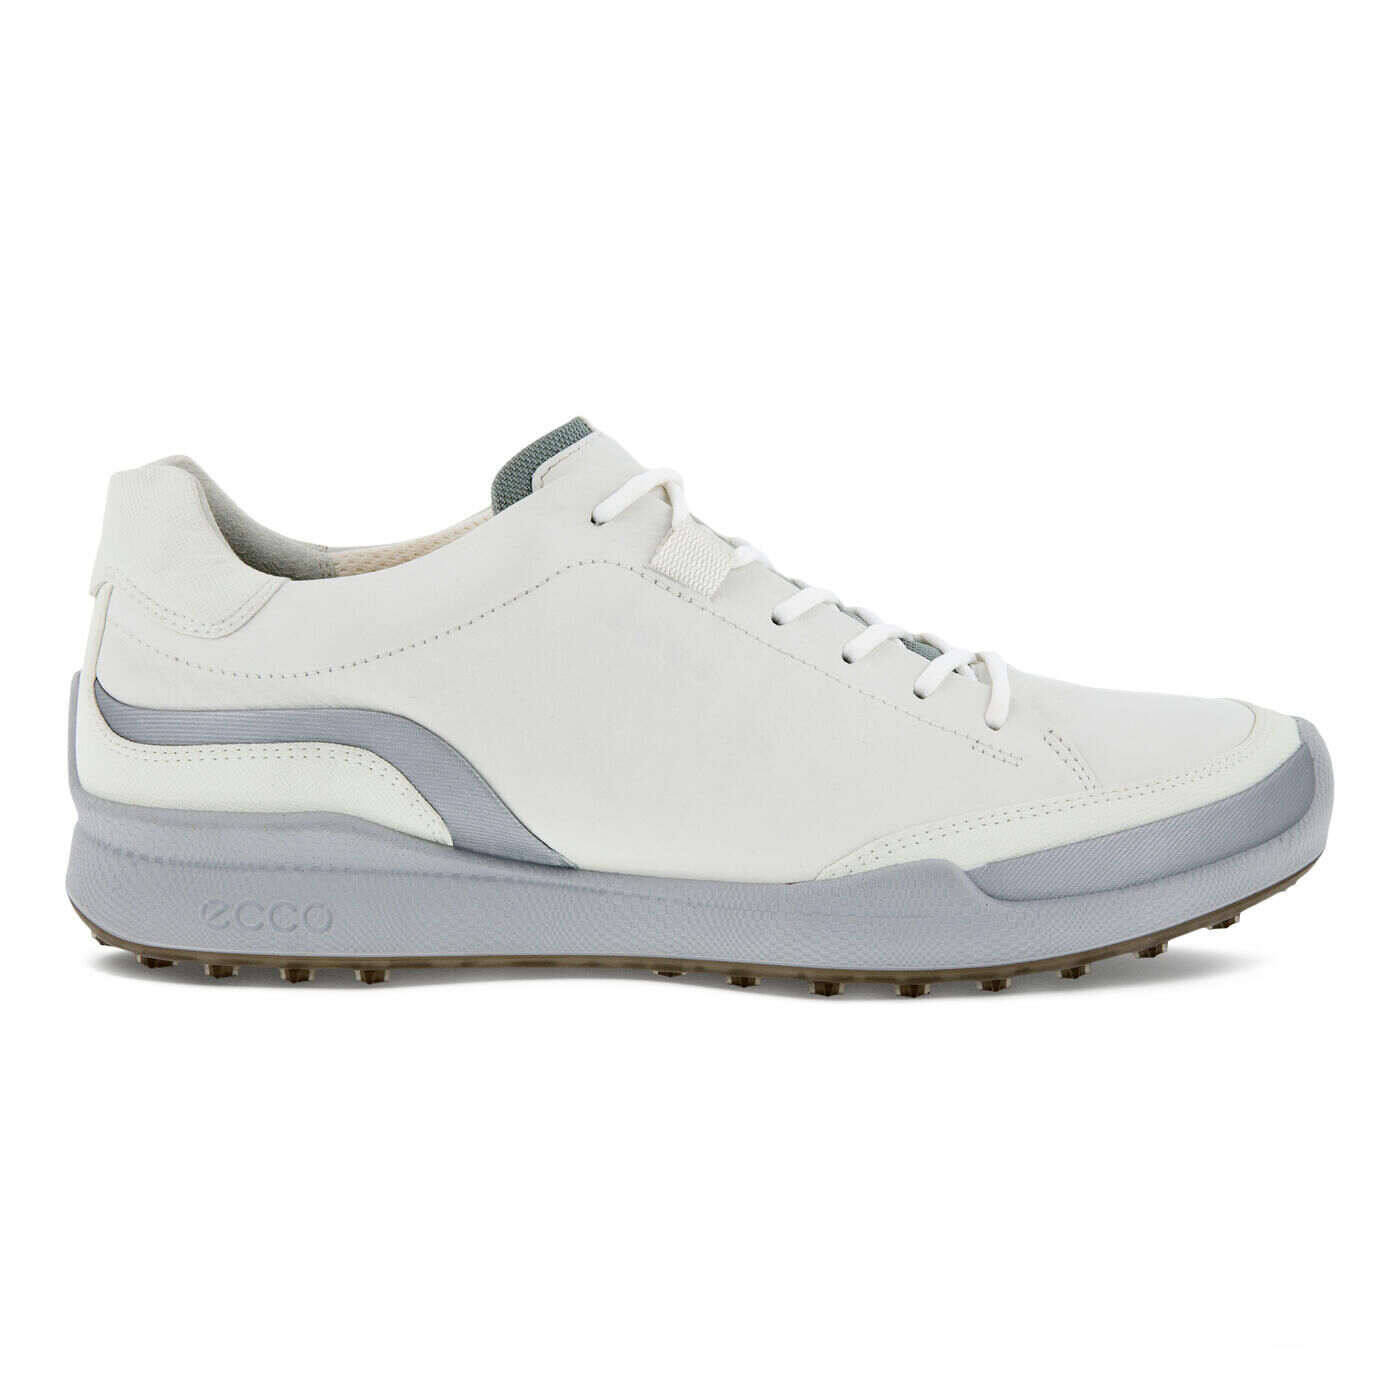 Ecco Golf- Biom Hybrid Spikeless Shoes